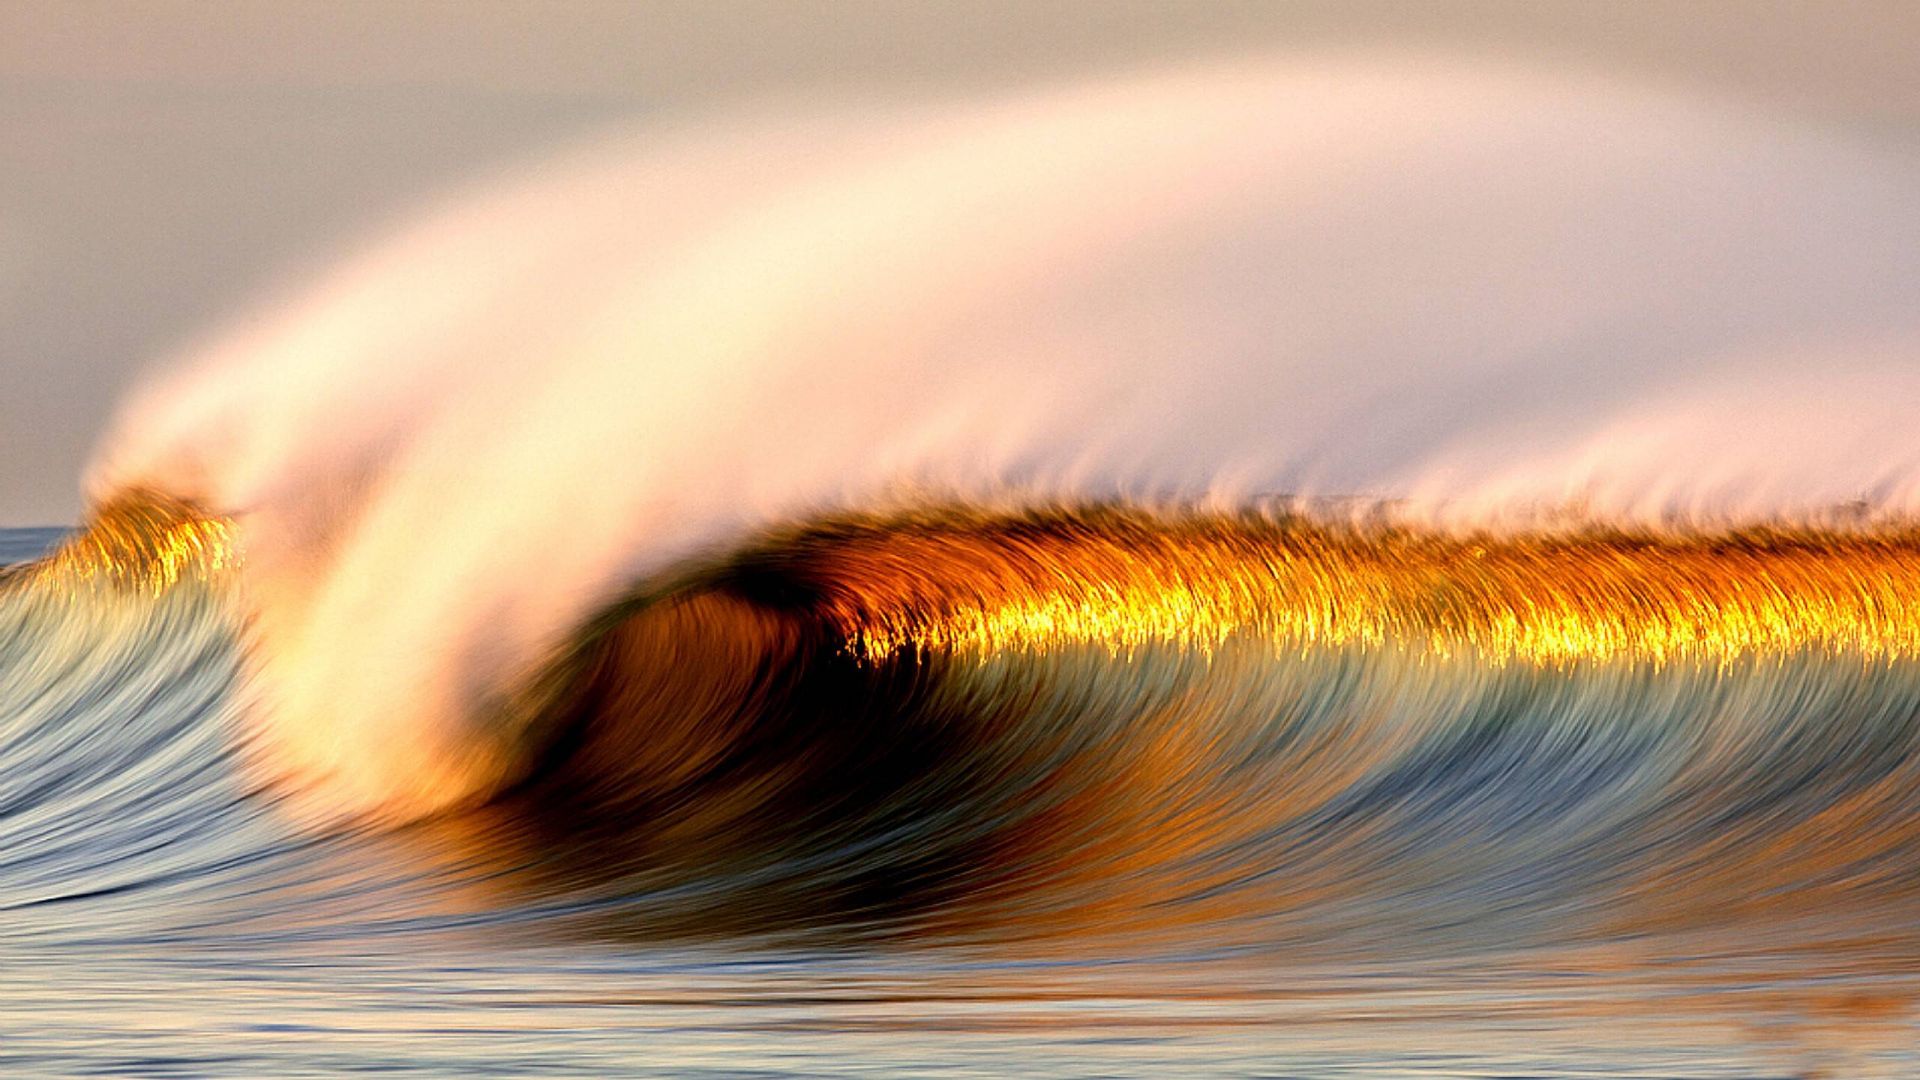 Wallpaper Sea waves look great in sunlight of sunset